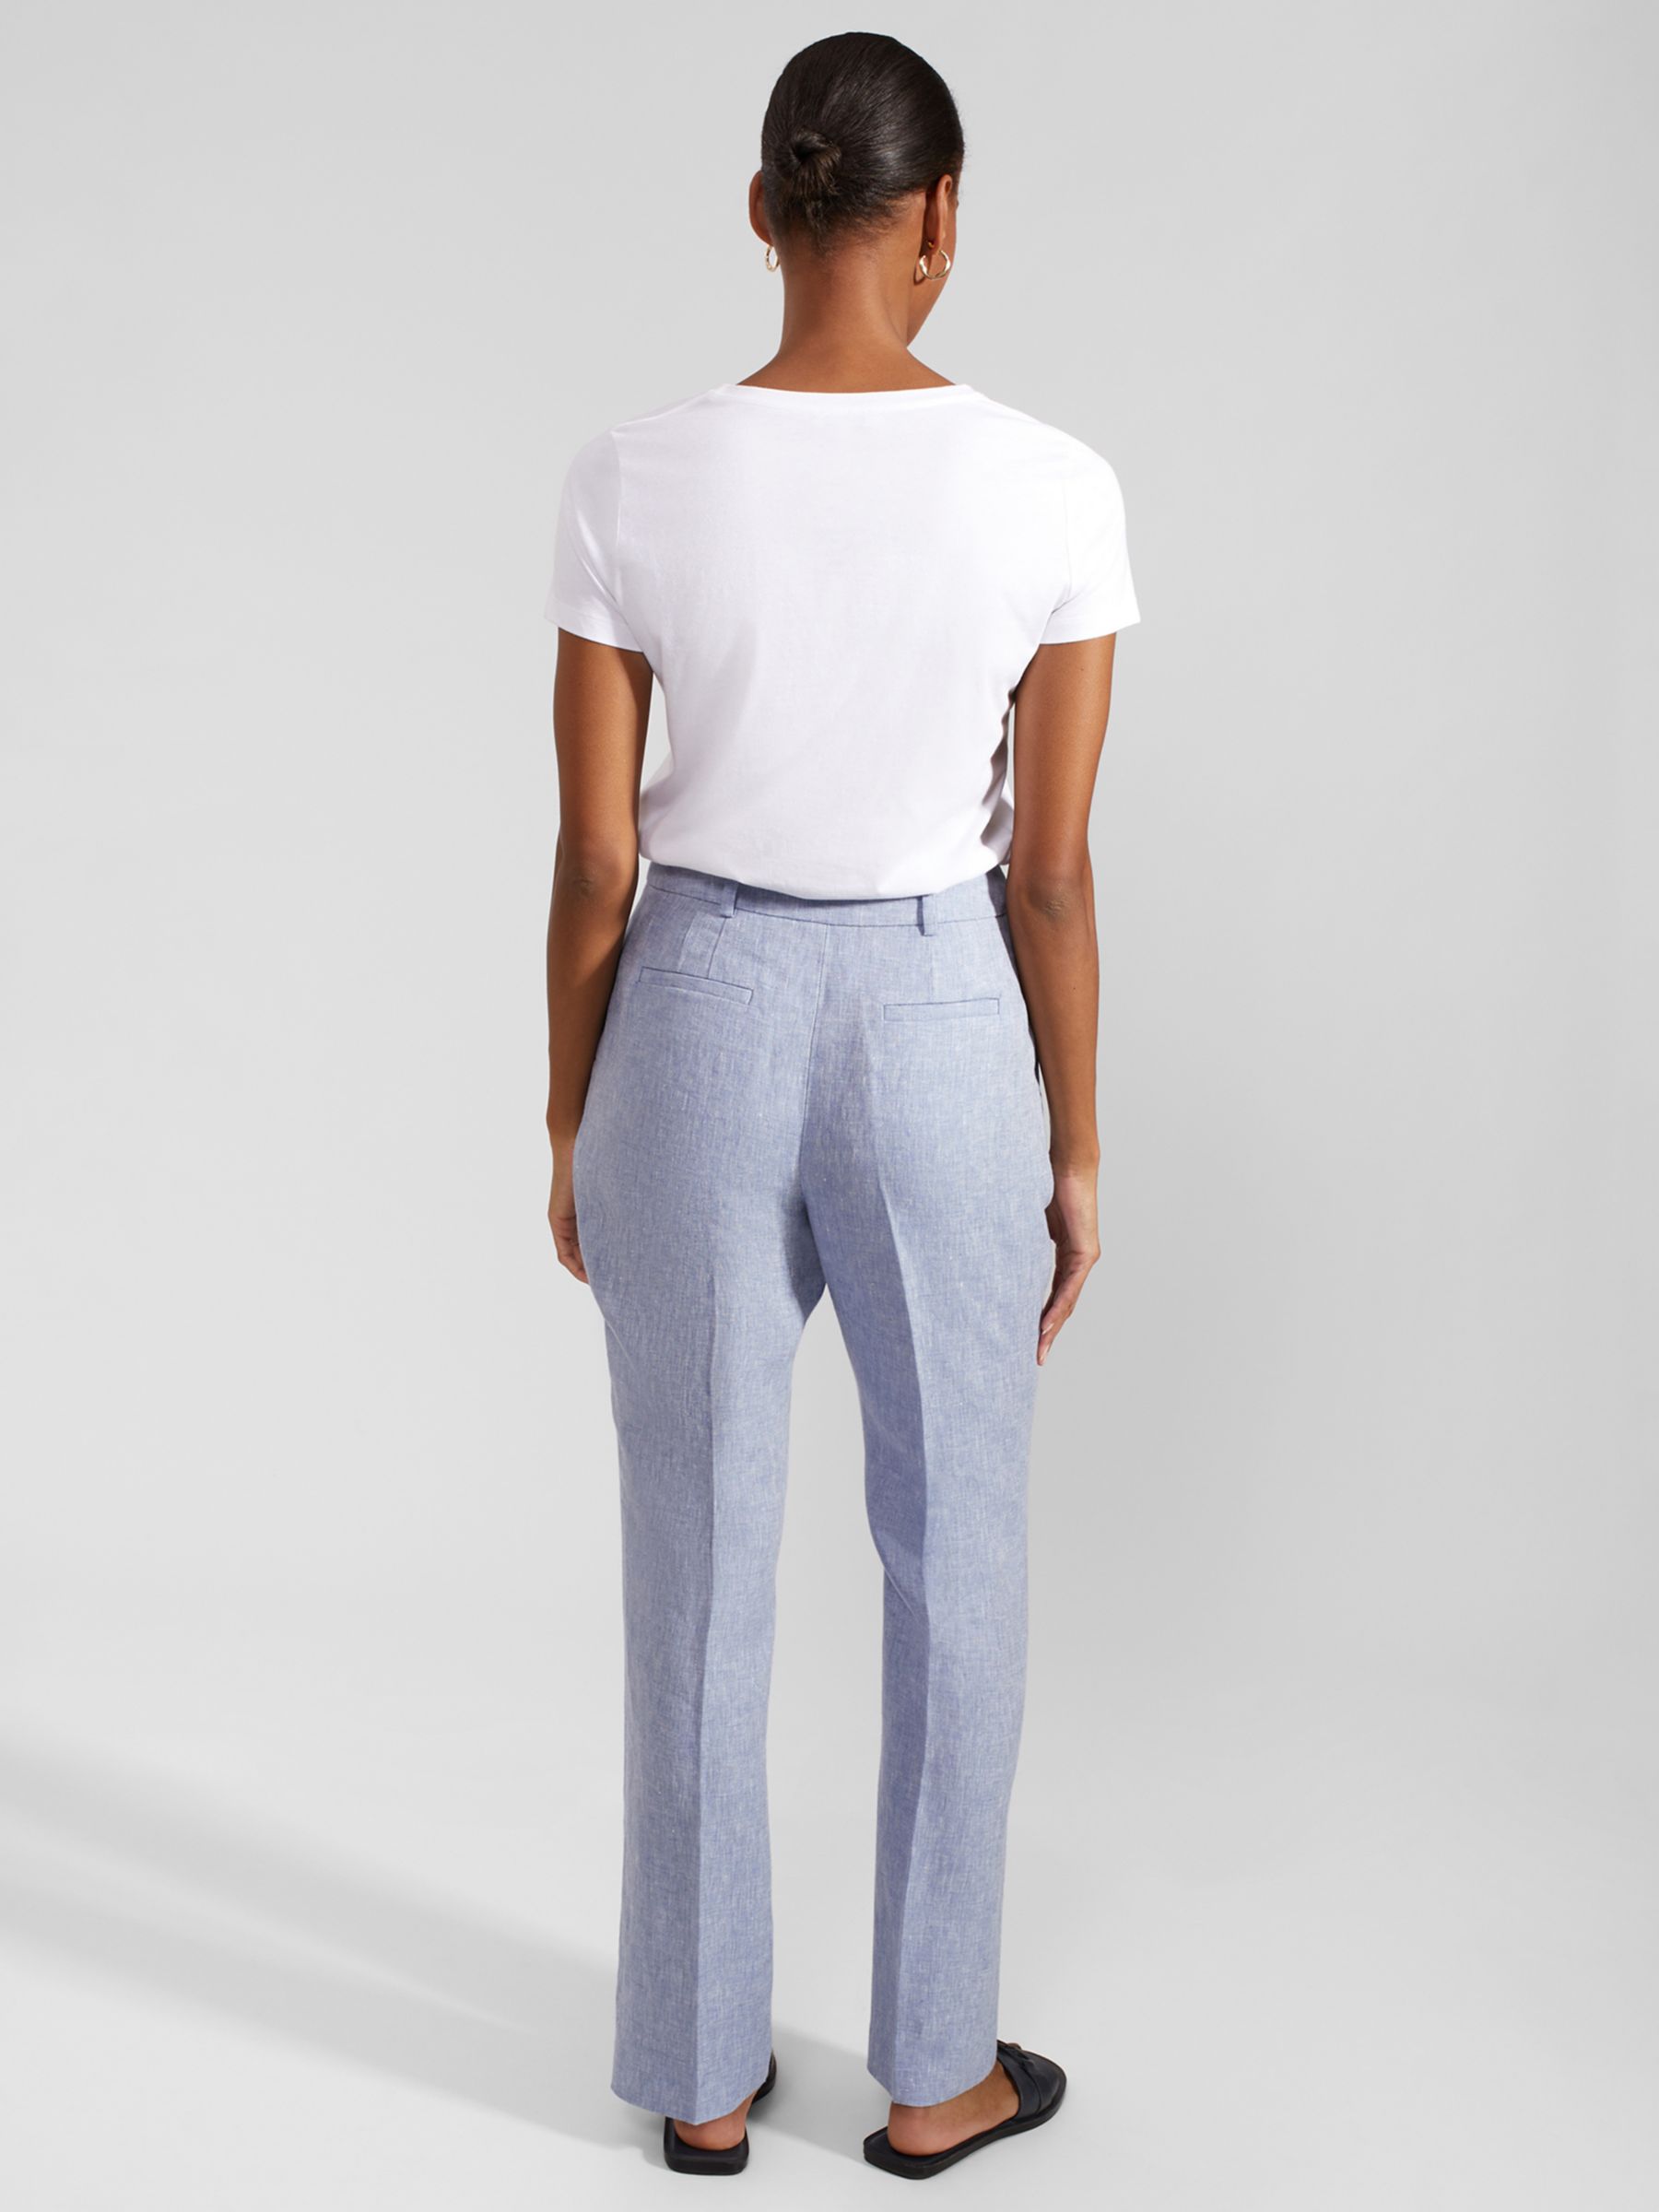 Hobbs Adina Cross Dye Linen Trousers, Blue/Ivory, 10